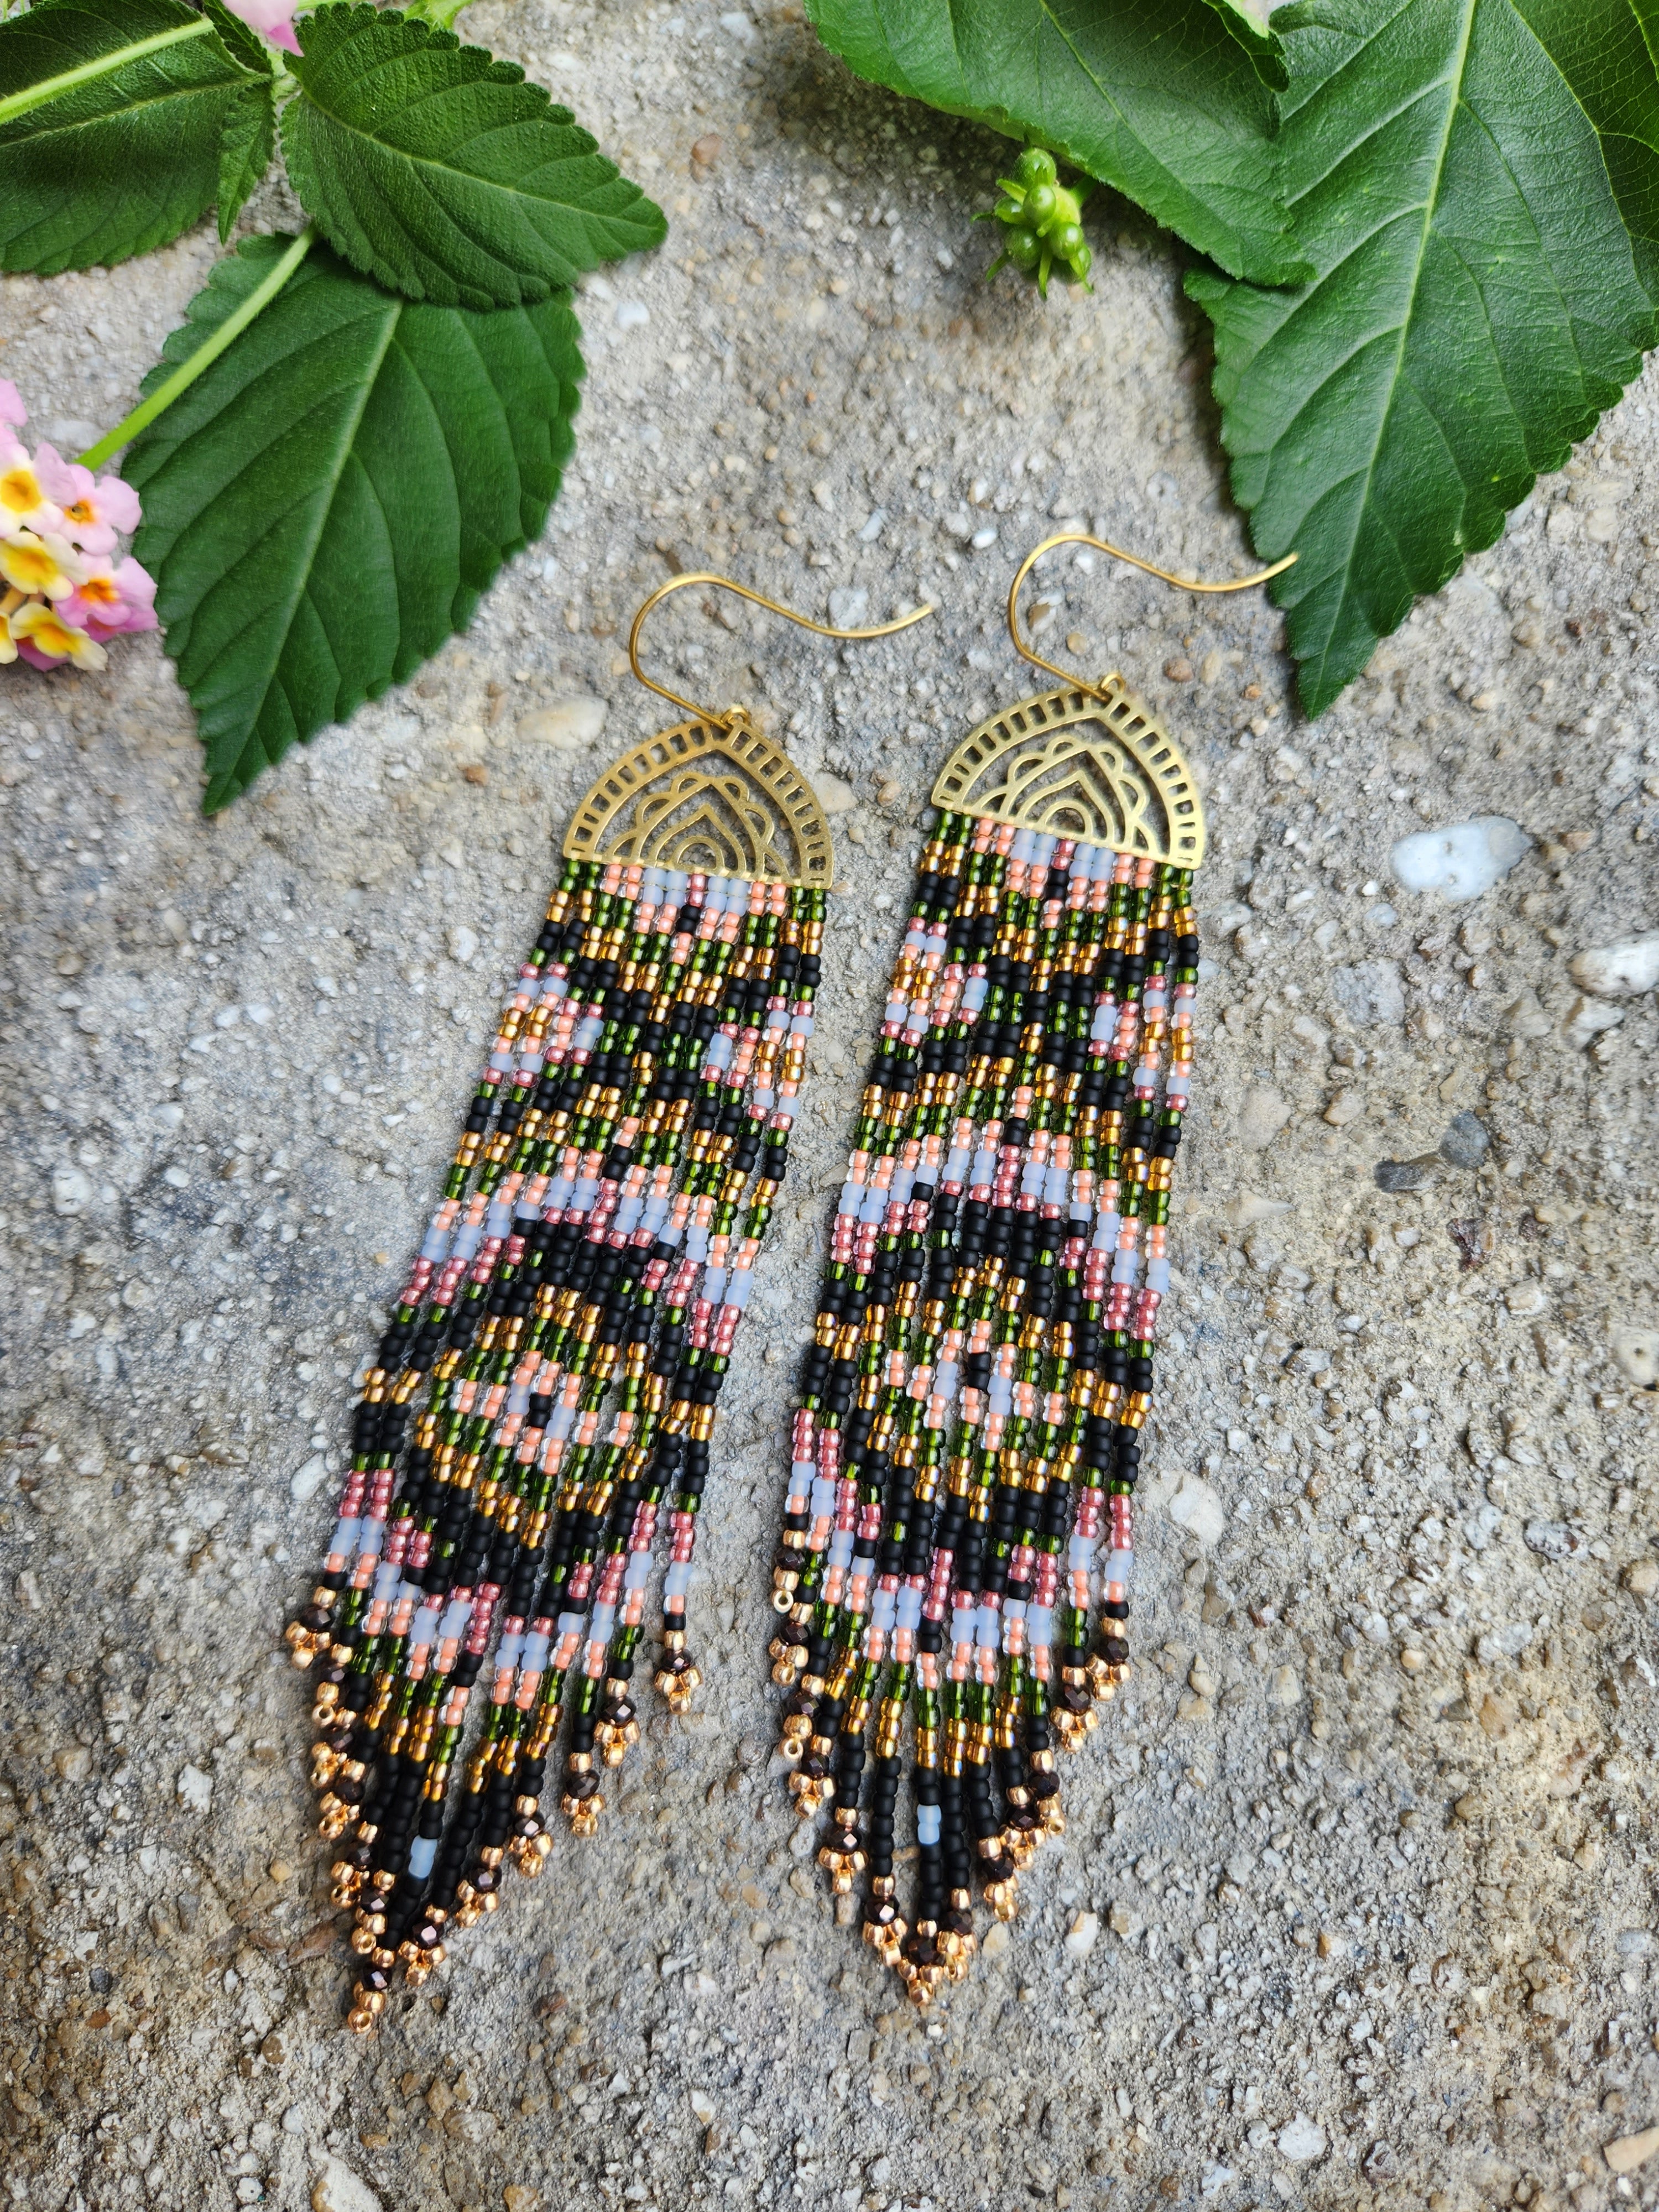 Native American Style Fringe Beaded Earrings  Easy to make hoop earrings   Brick stitch tutorial  YouTube